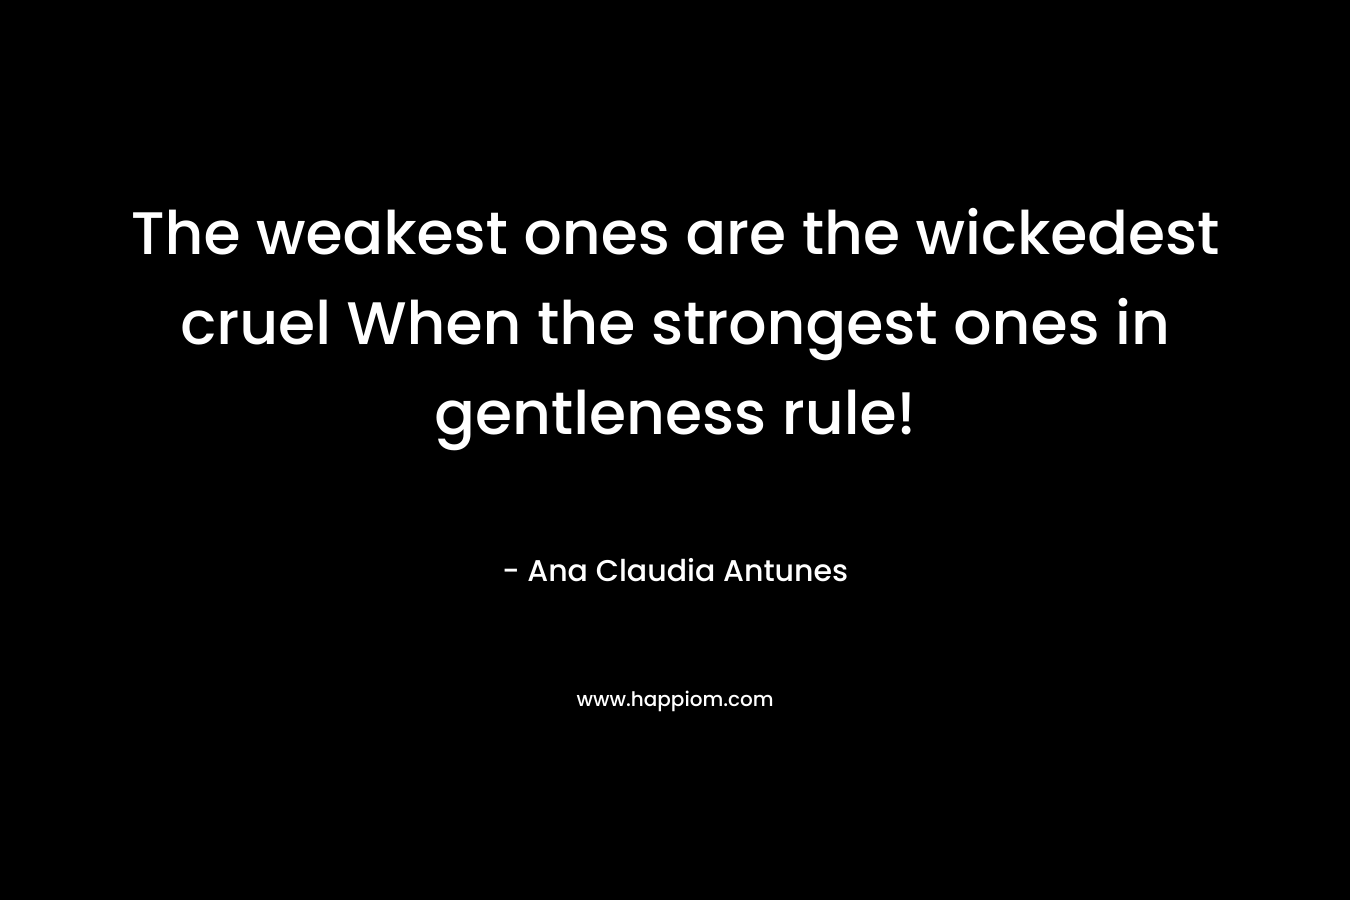 The weakest ones are the wickedest cruel When the strongest ones in gentleness rule!